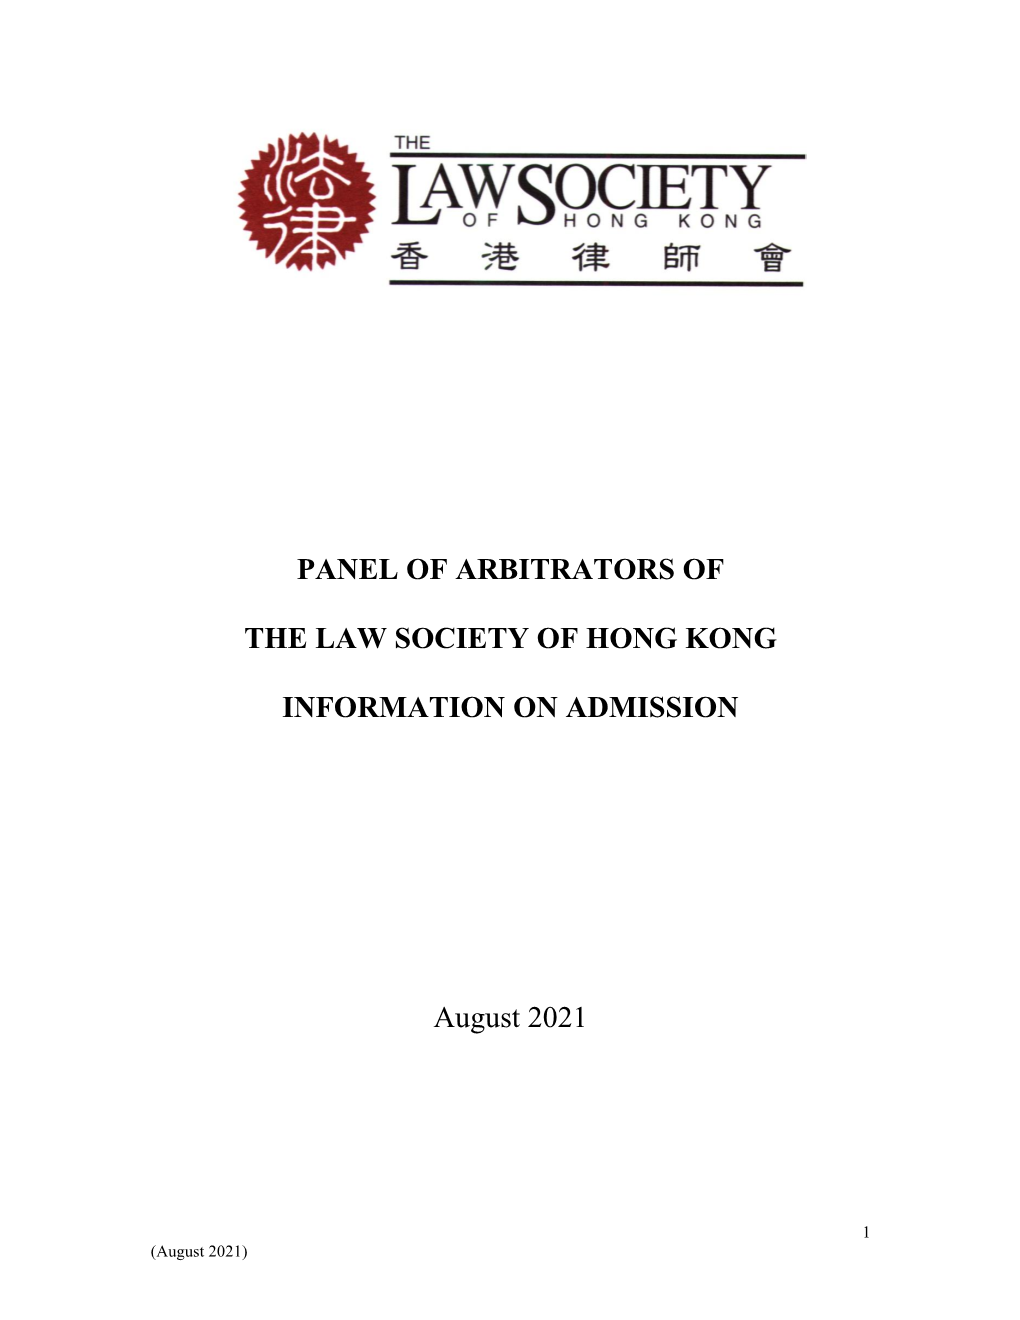 Panel of Arbitrators of the Law Society of Hong Kong